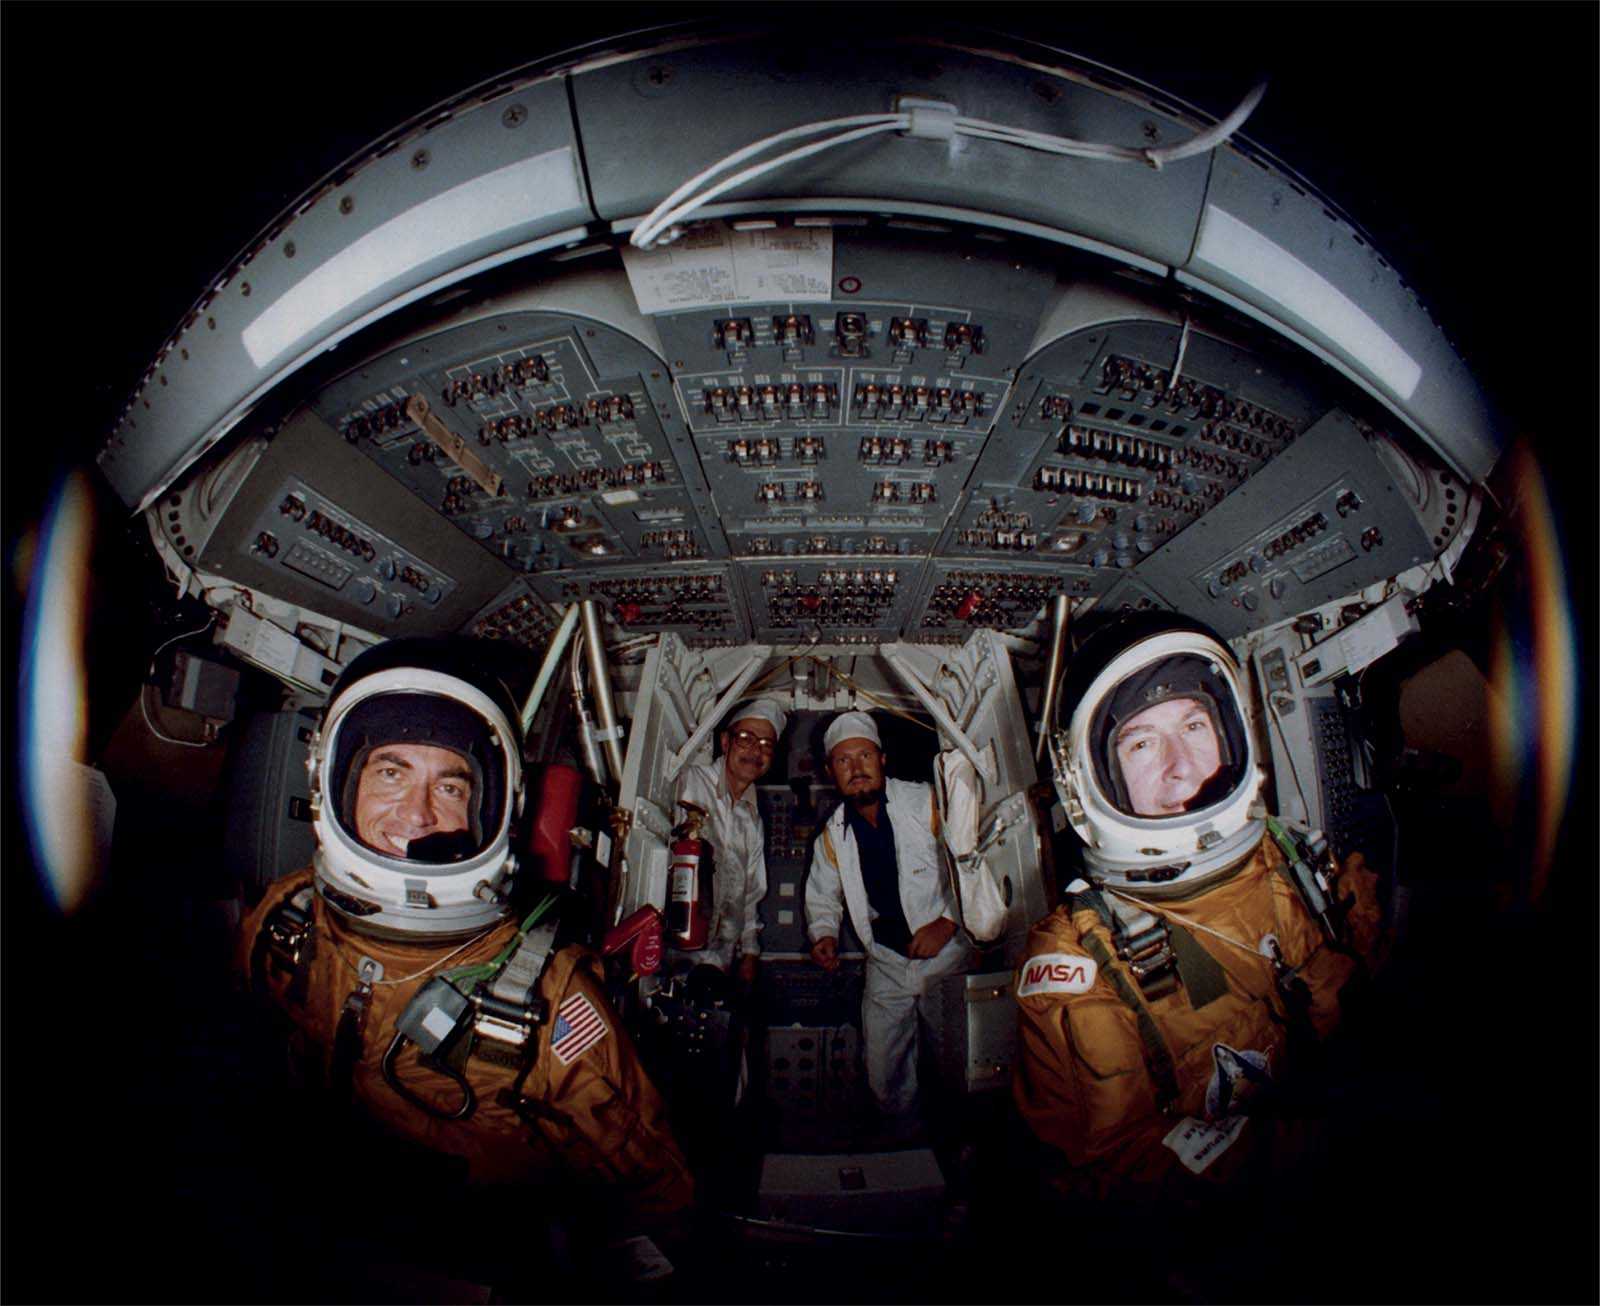 Crew of 1st Space Shuttle Flight John Young 6 Sizes Robert Crippen New Photo 